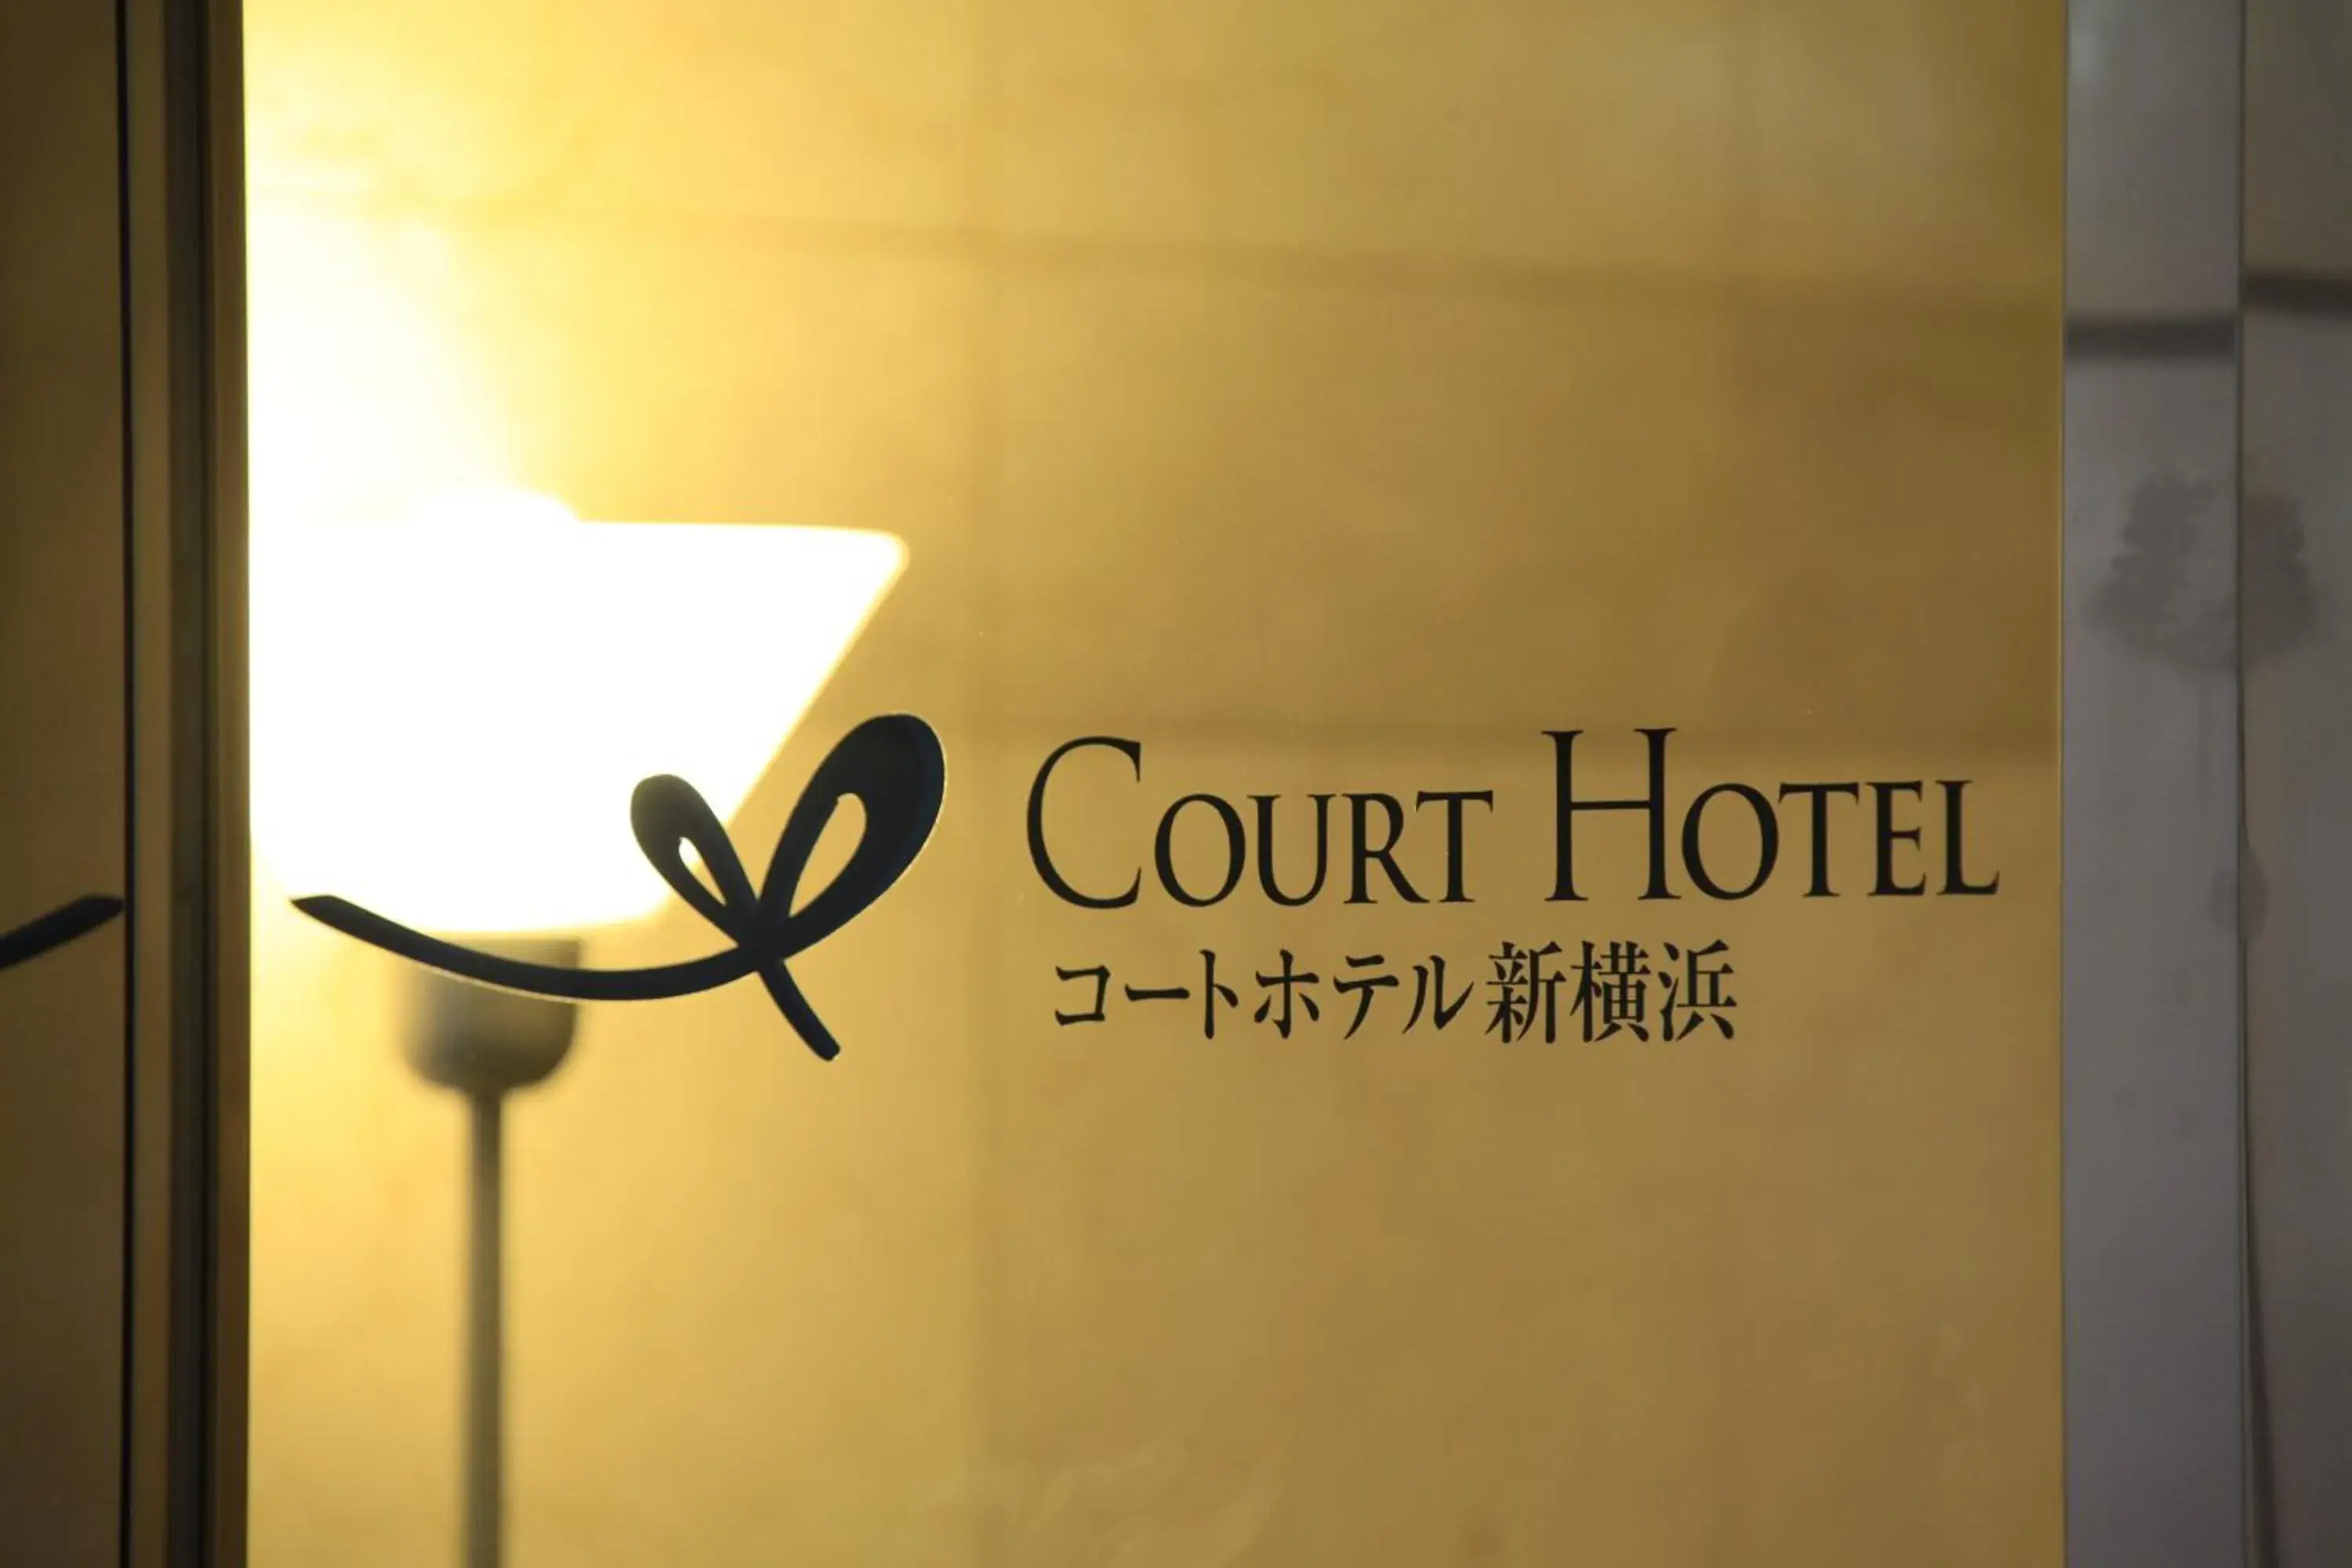 Property logo or sign in Court Hotel Shin-Yokohama